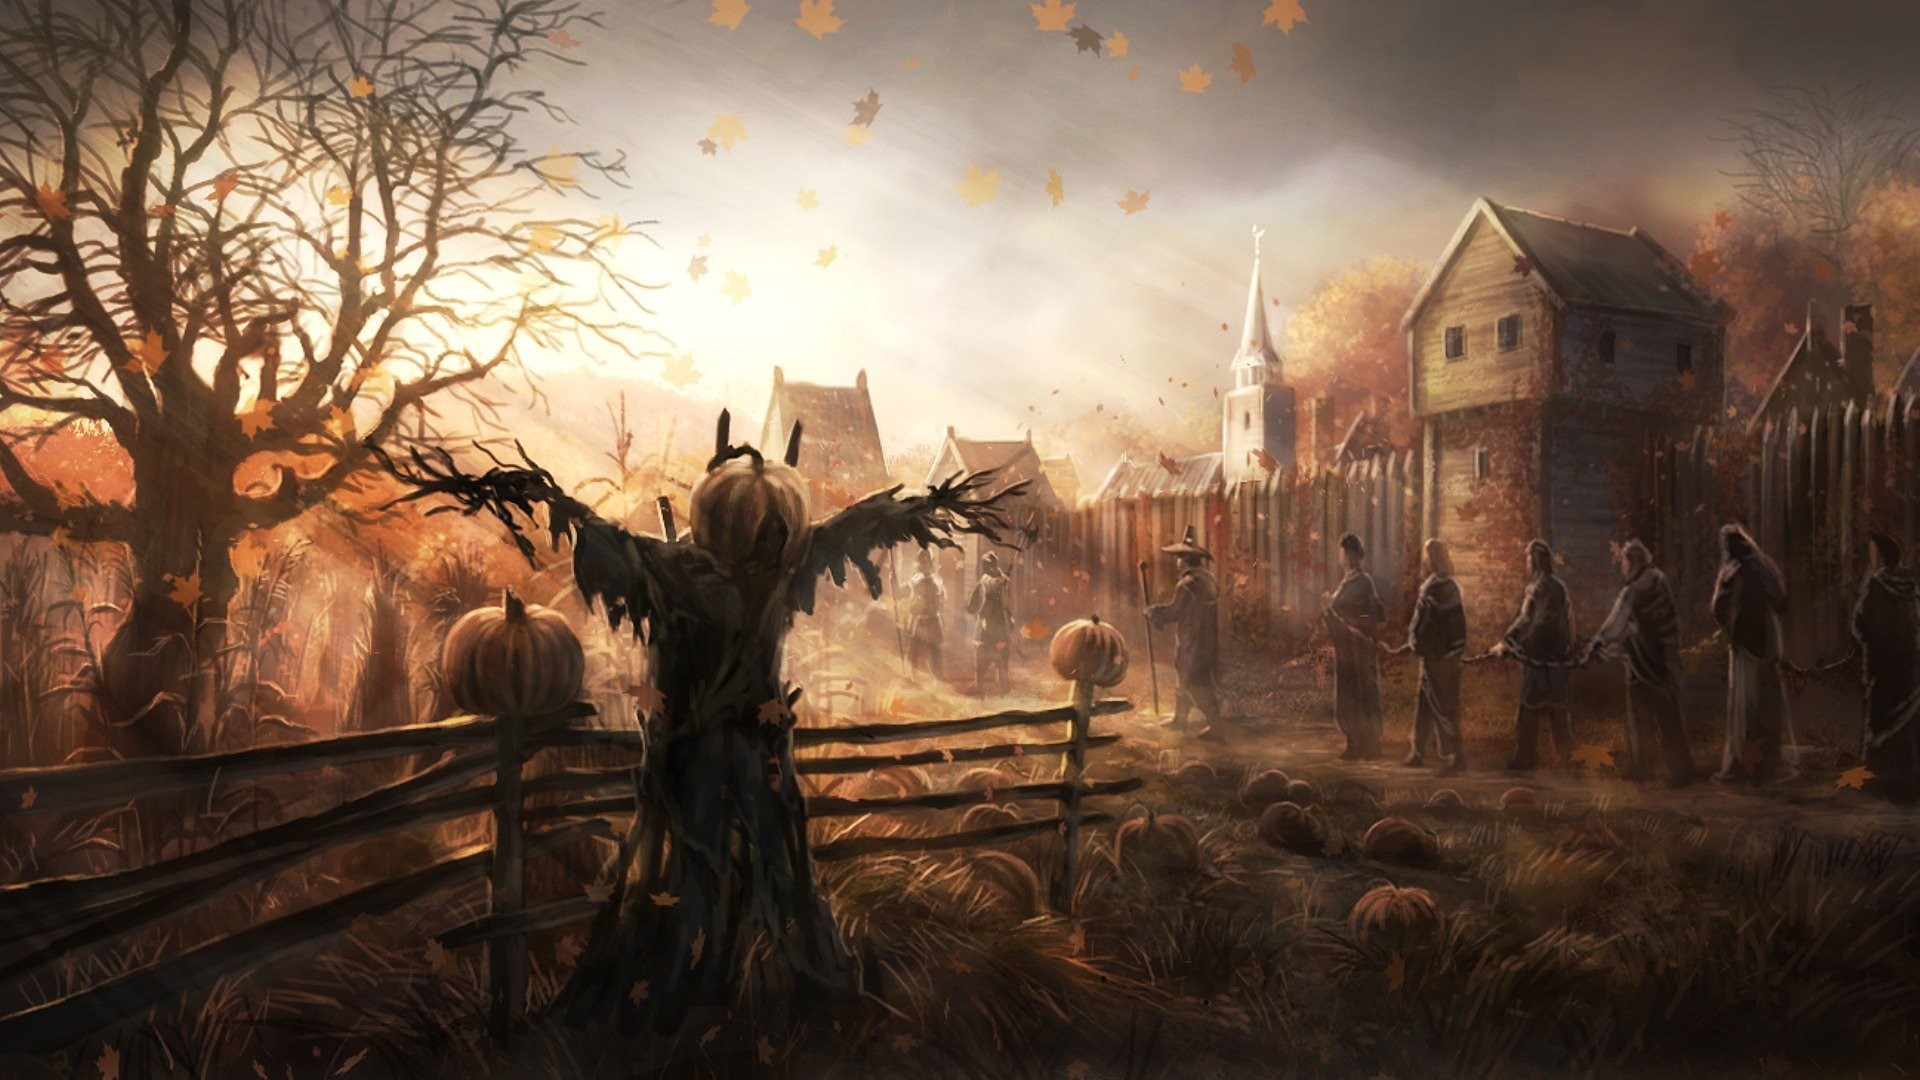 1920x1080 art autumn tree house fences church garden scarecrow pumpkin wind leaves  people prisoners